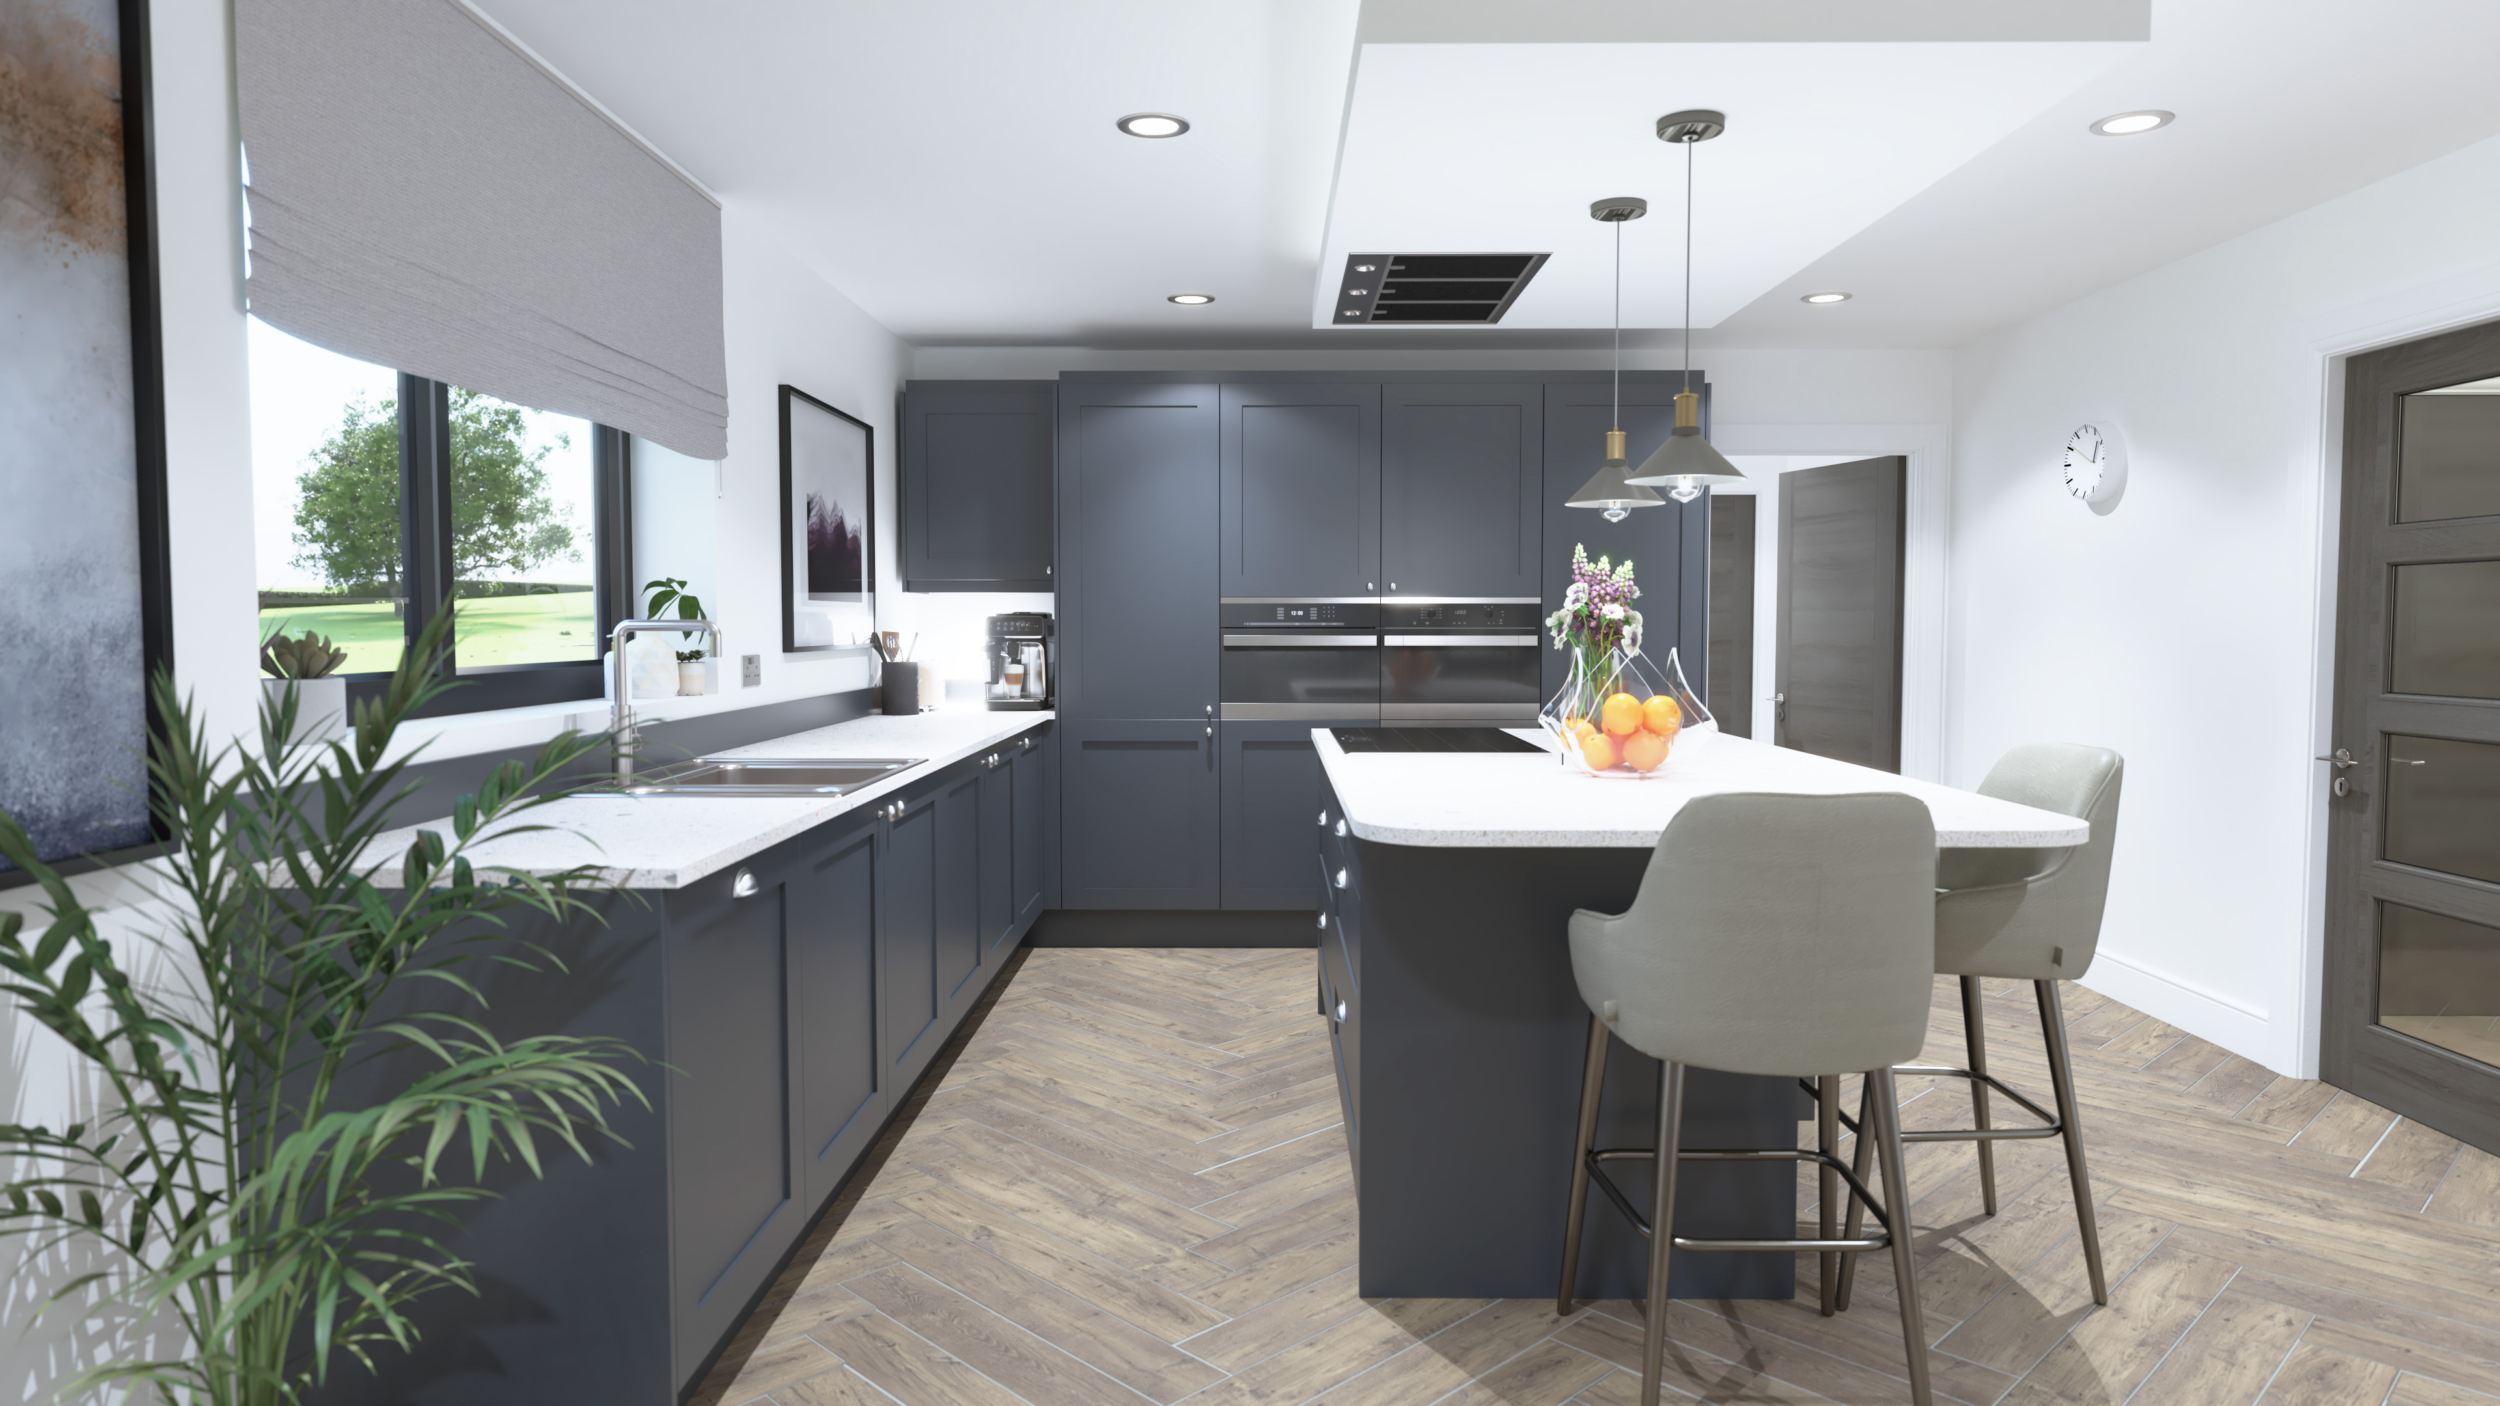 CGI by Linear CGI Studio. The Stables Property Development, Preston, Lancashire. kitchen CGI